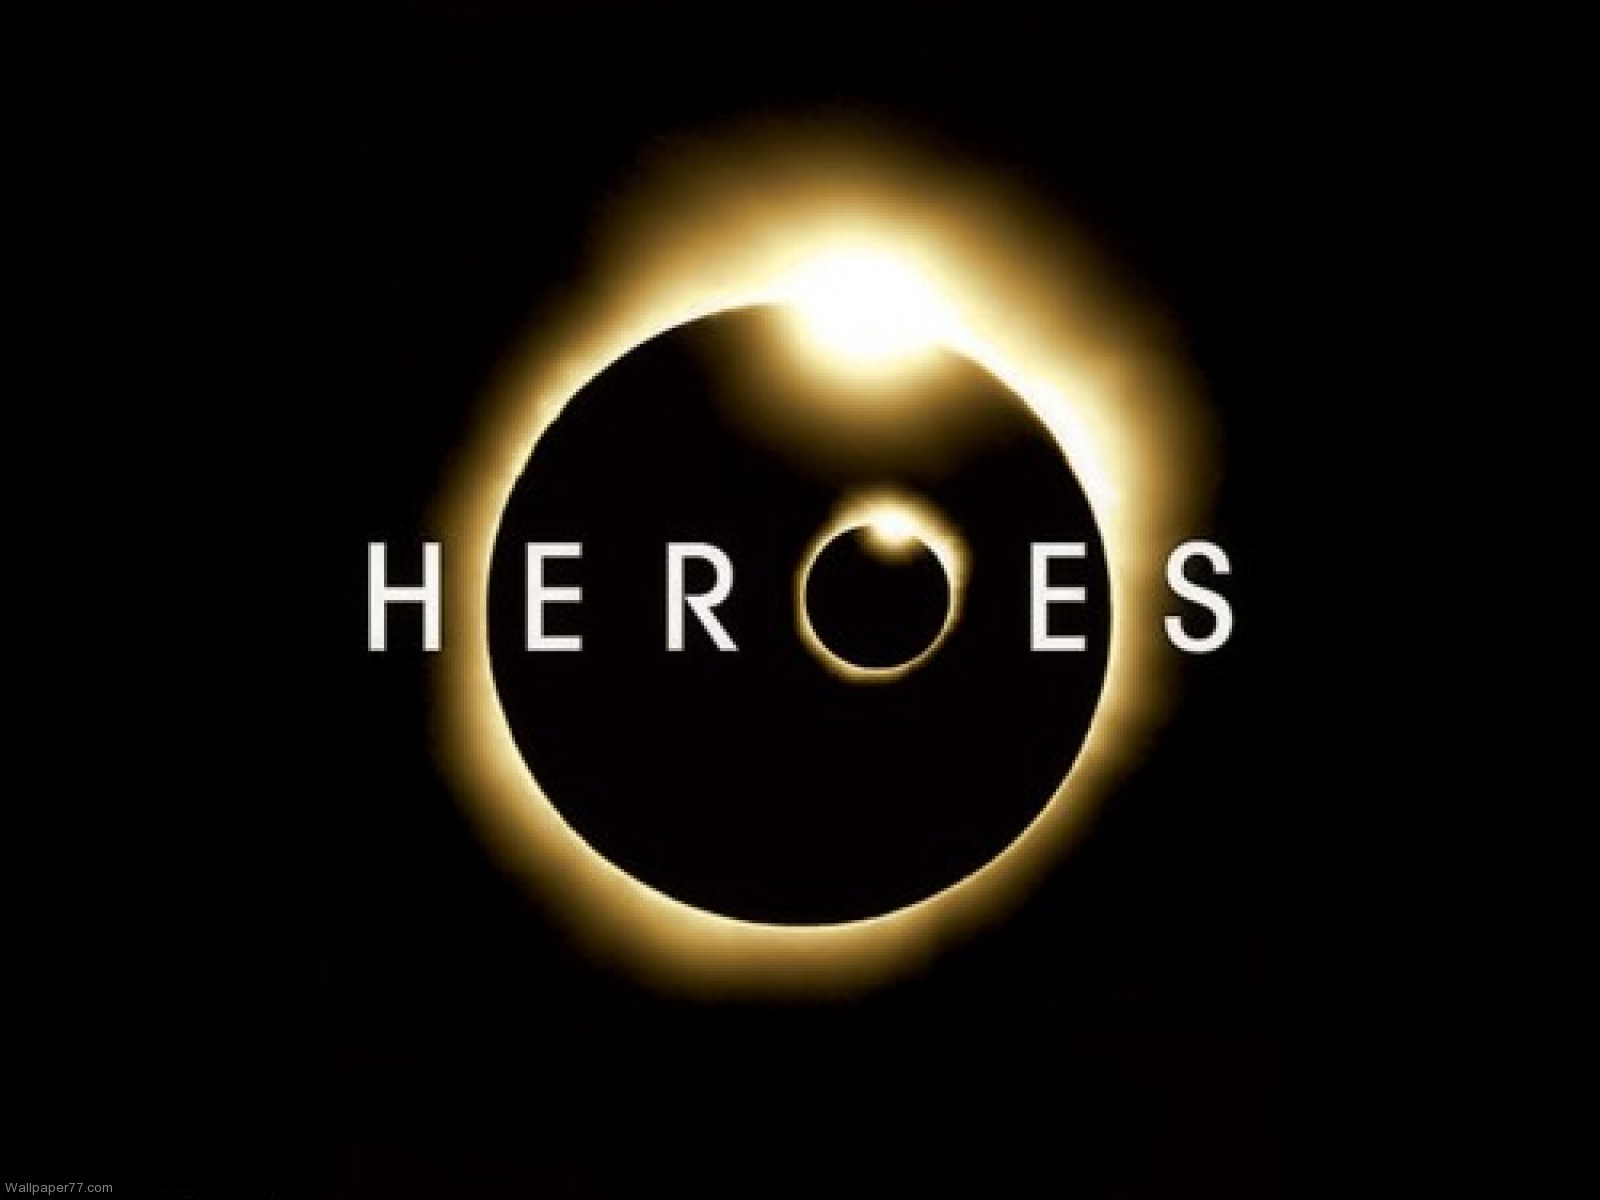 Heroes Wallpaper HD In Movies Imageci